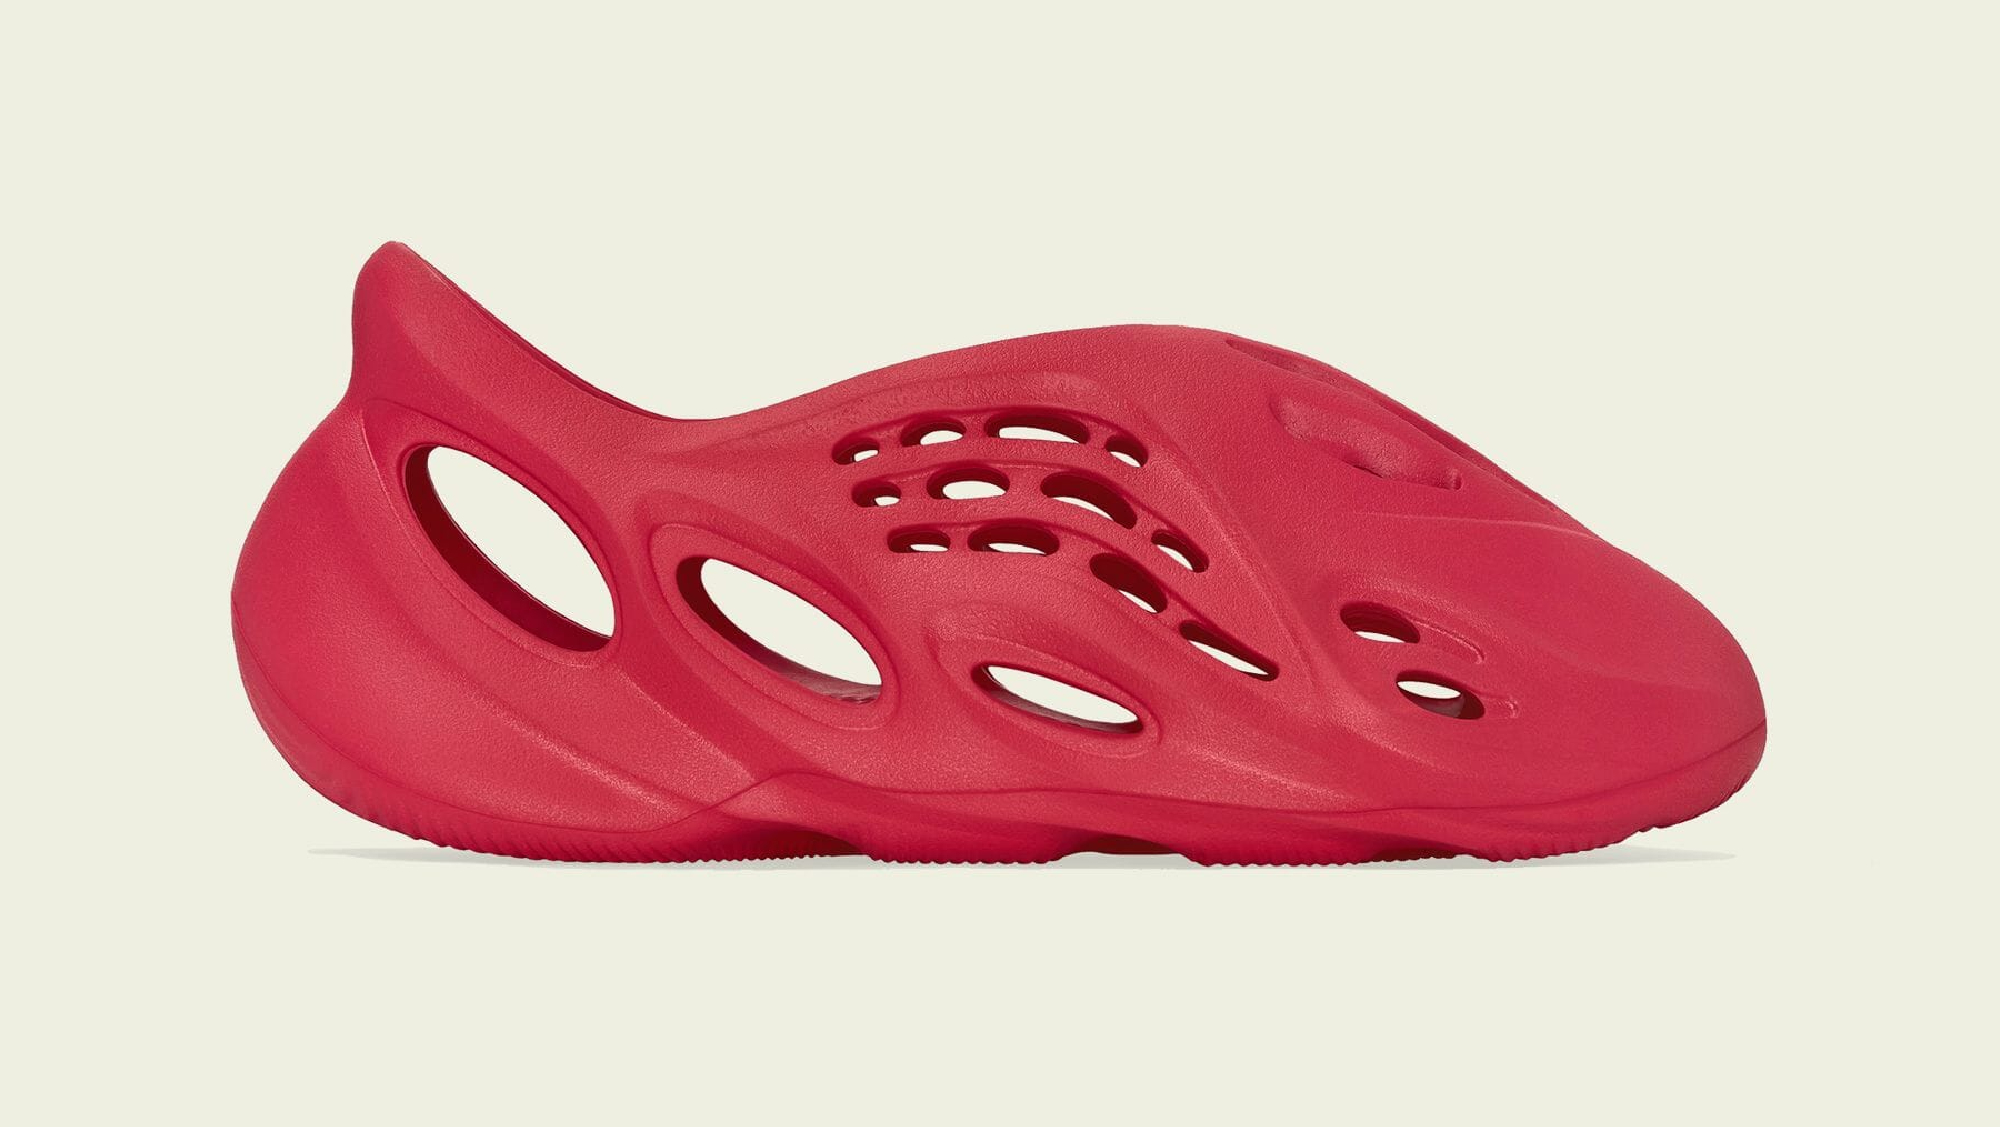 Adidas Yeezy Foam Runner \